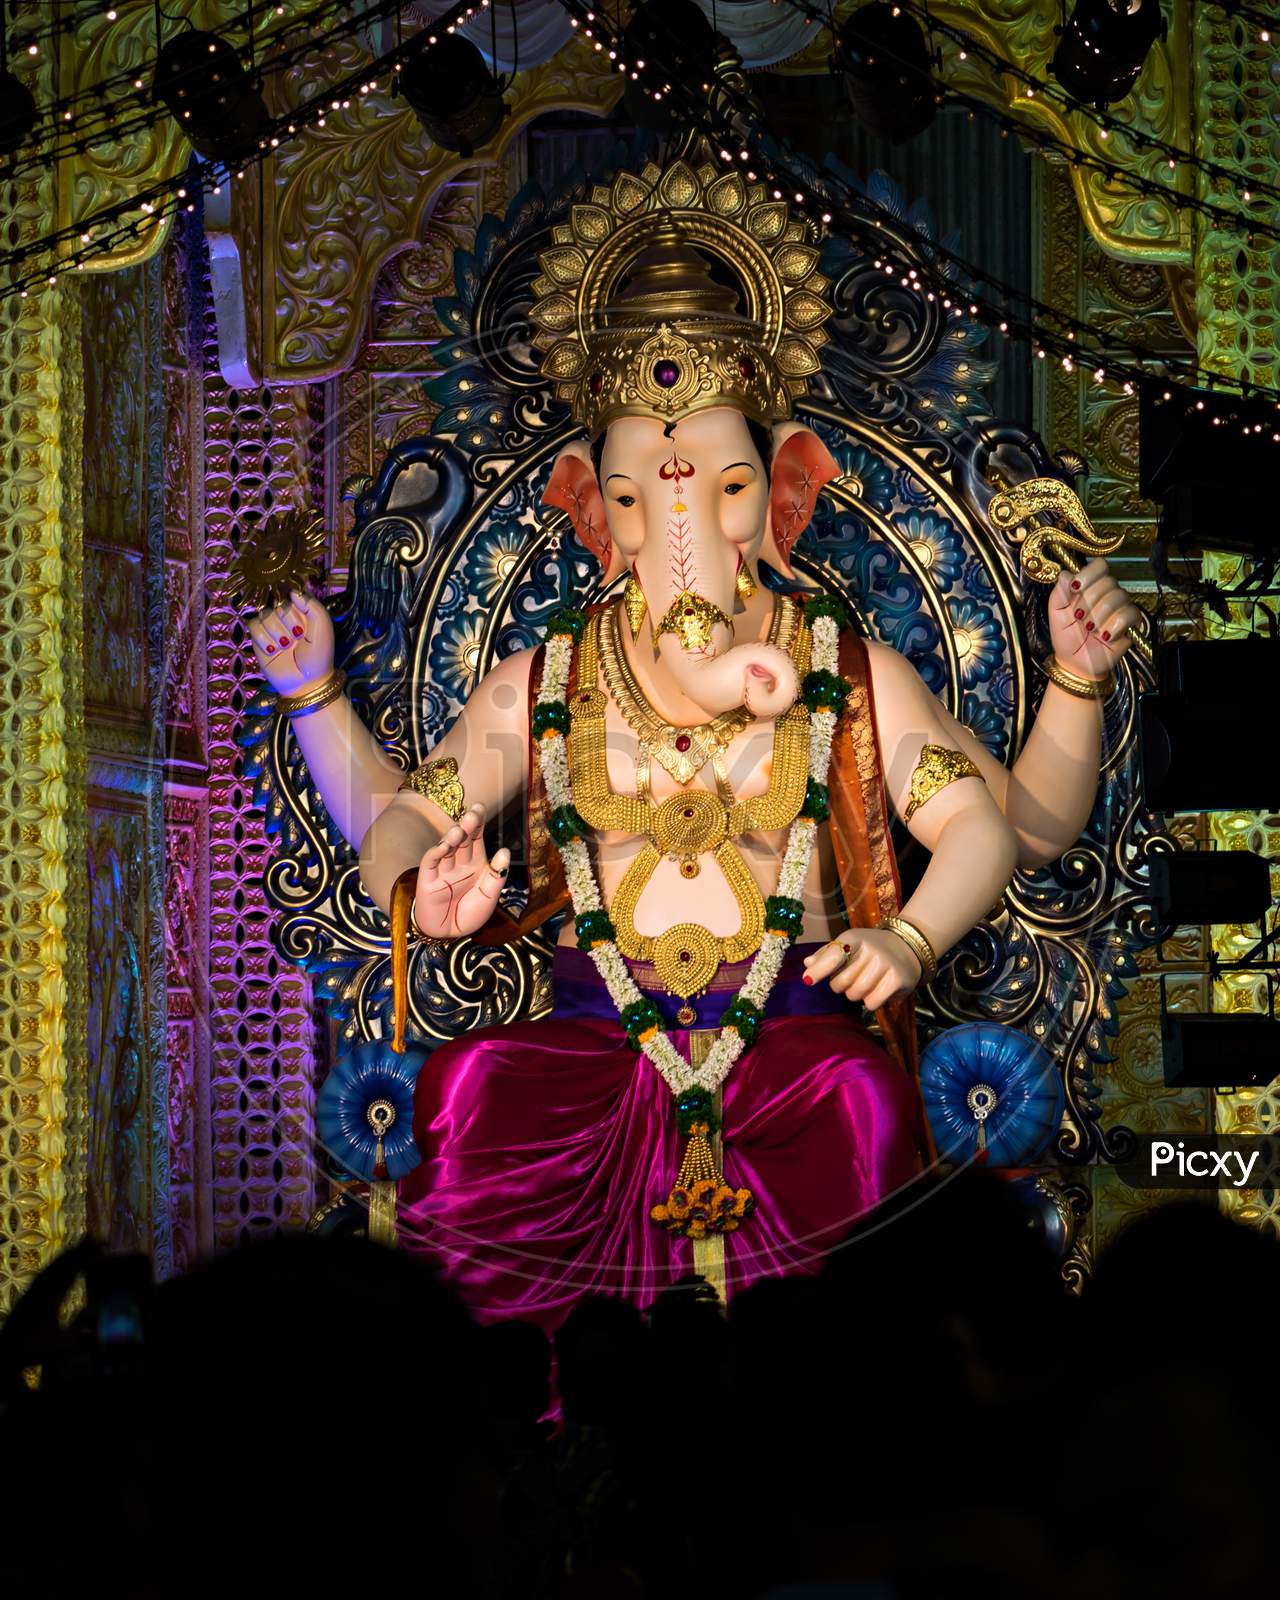 Closeup , Portrait View Of Decorated And Garlanded Idol Of Hindu God Ganesha.